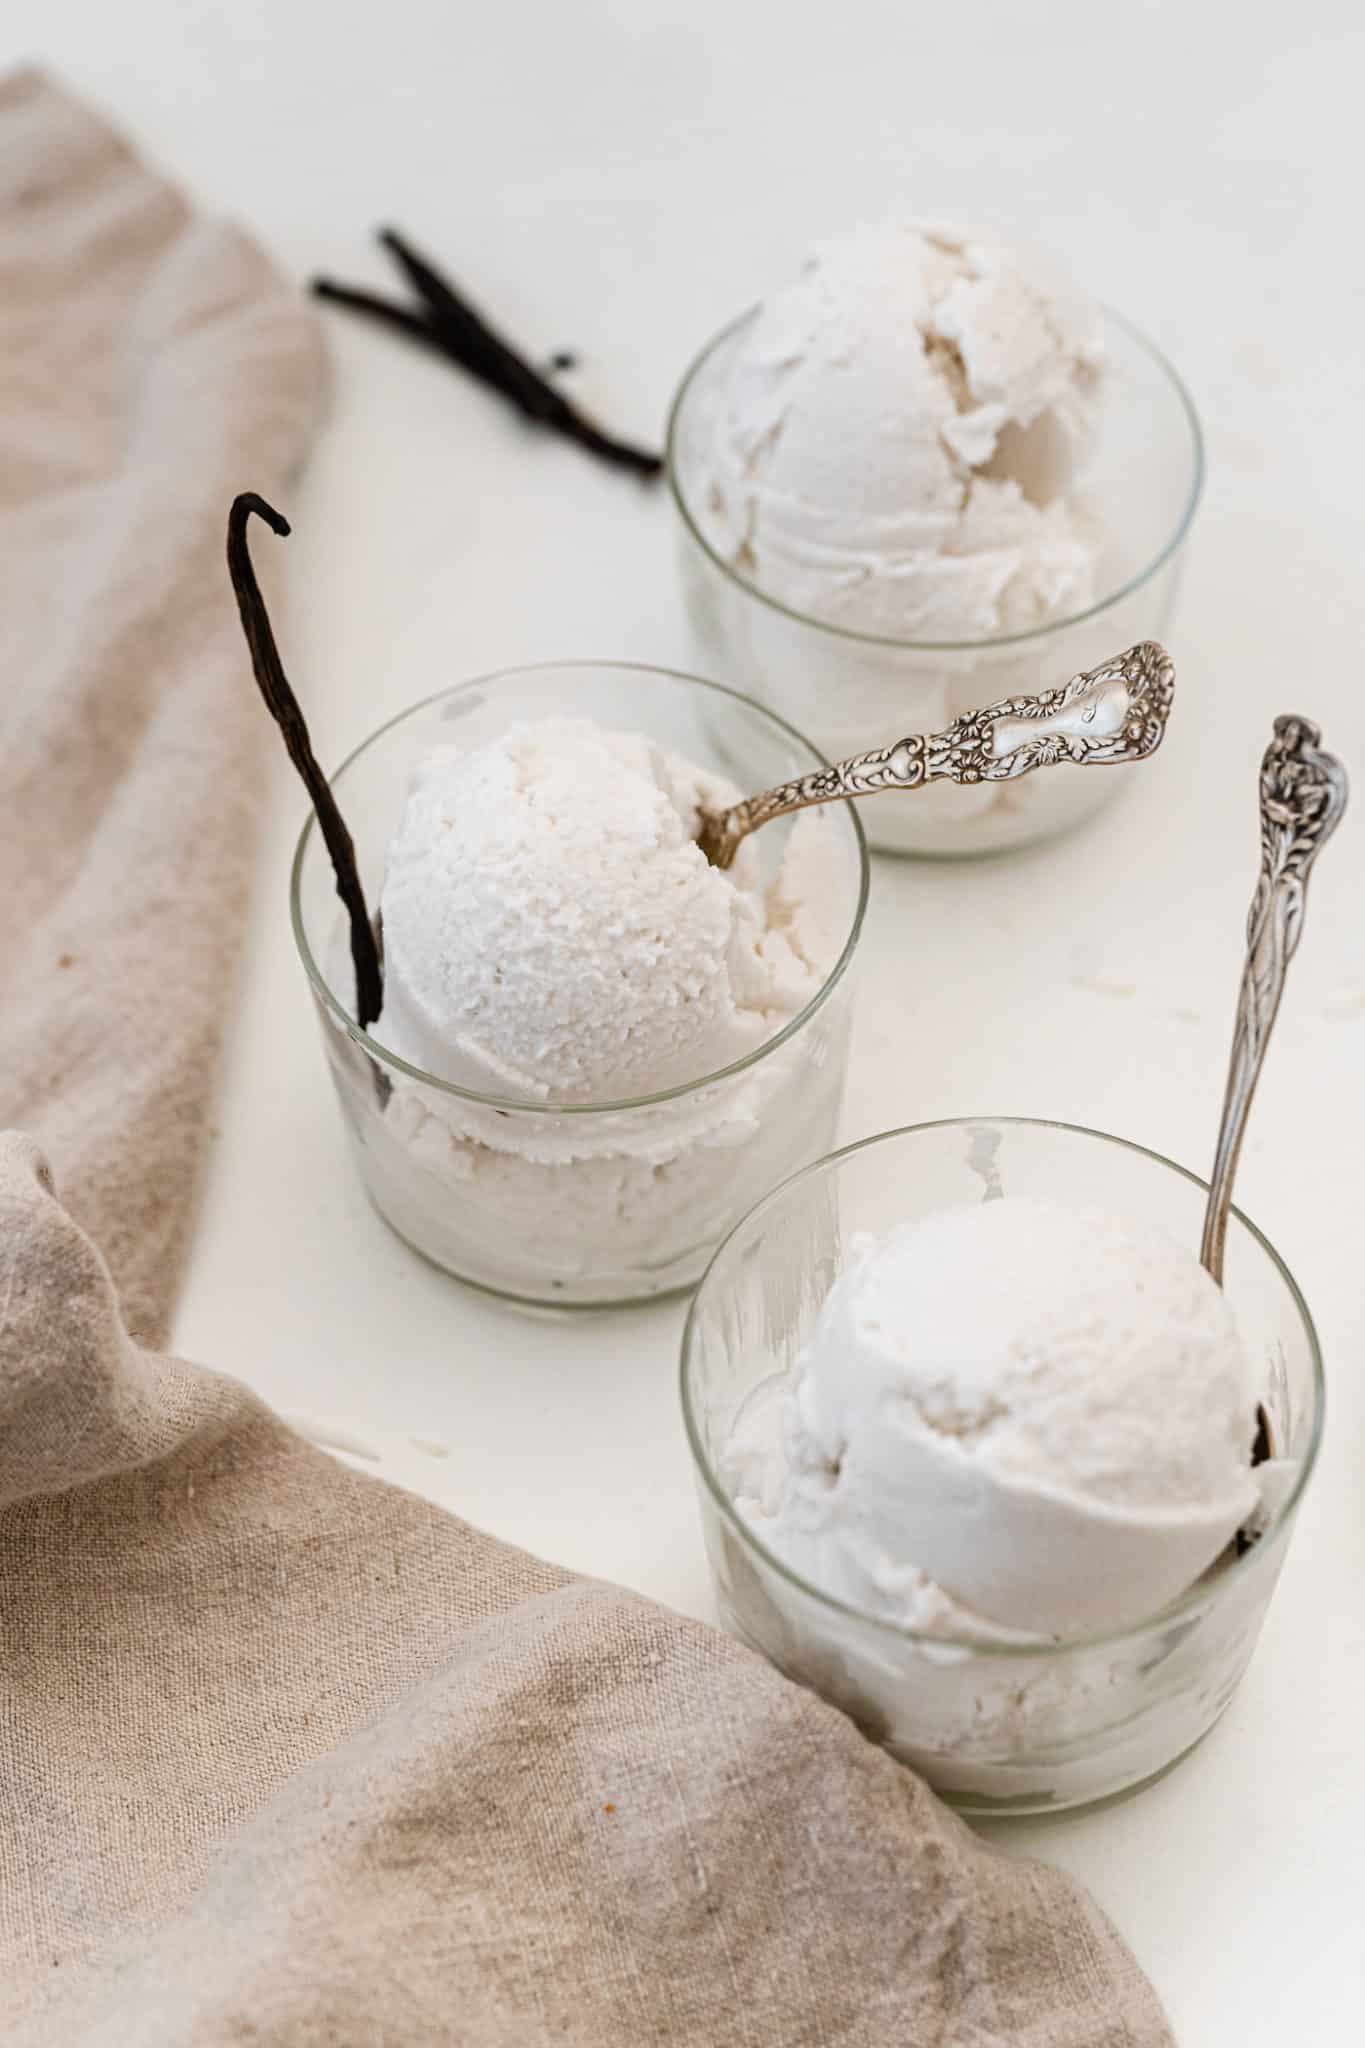 Three small glass bowls of no-churn vanilla ice cream.